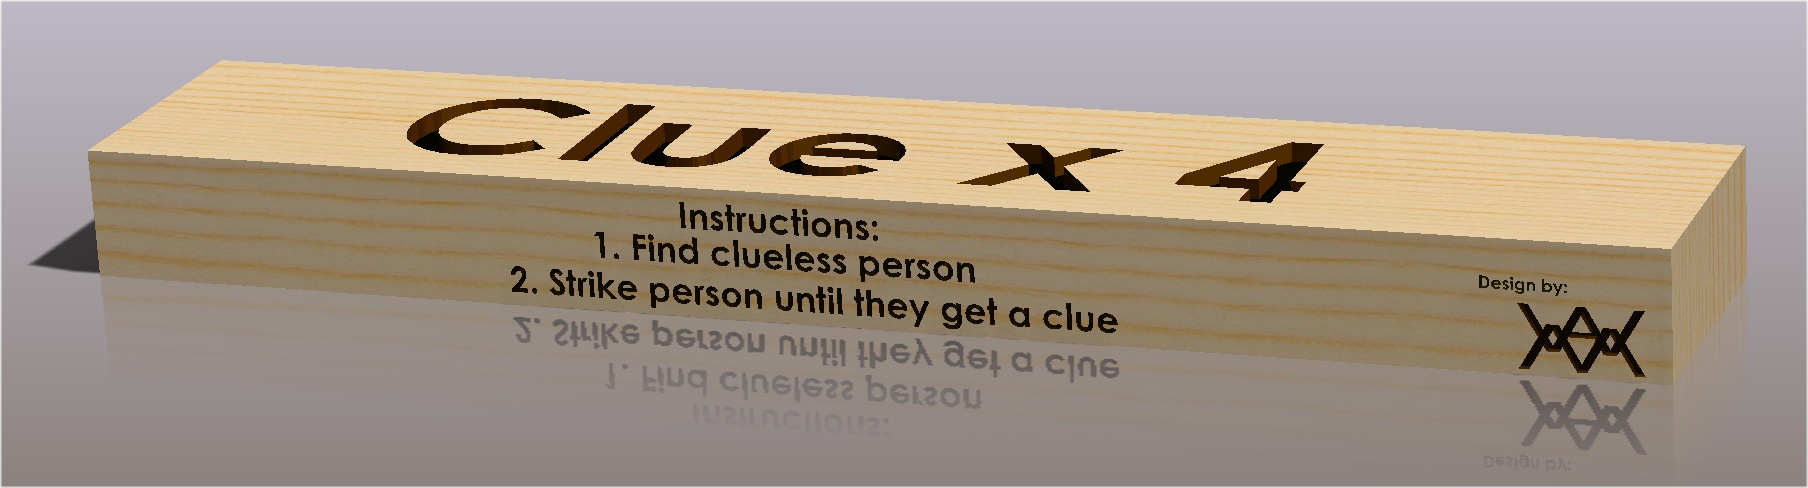 cluex4lg.jpg